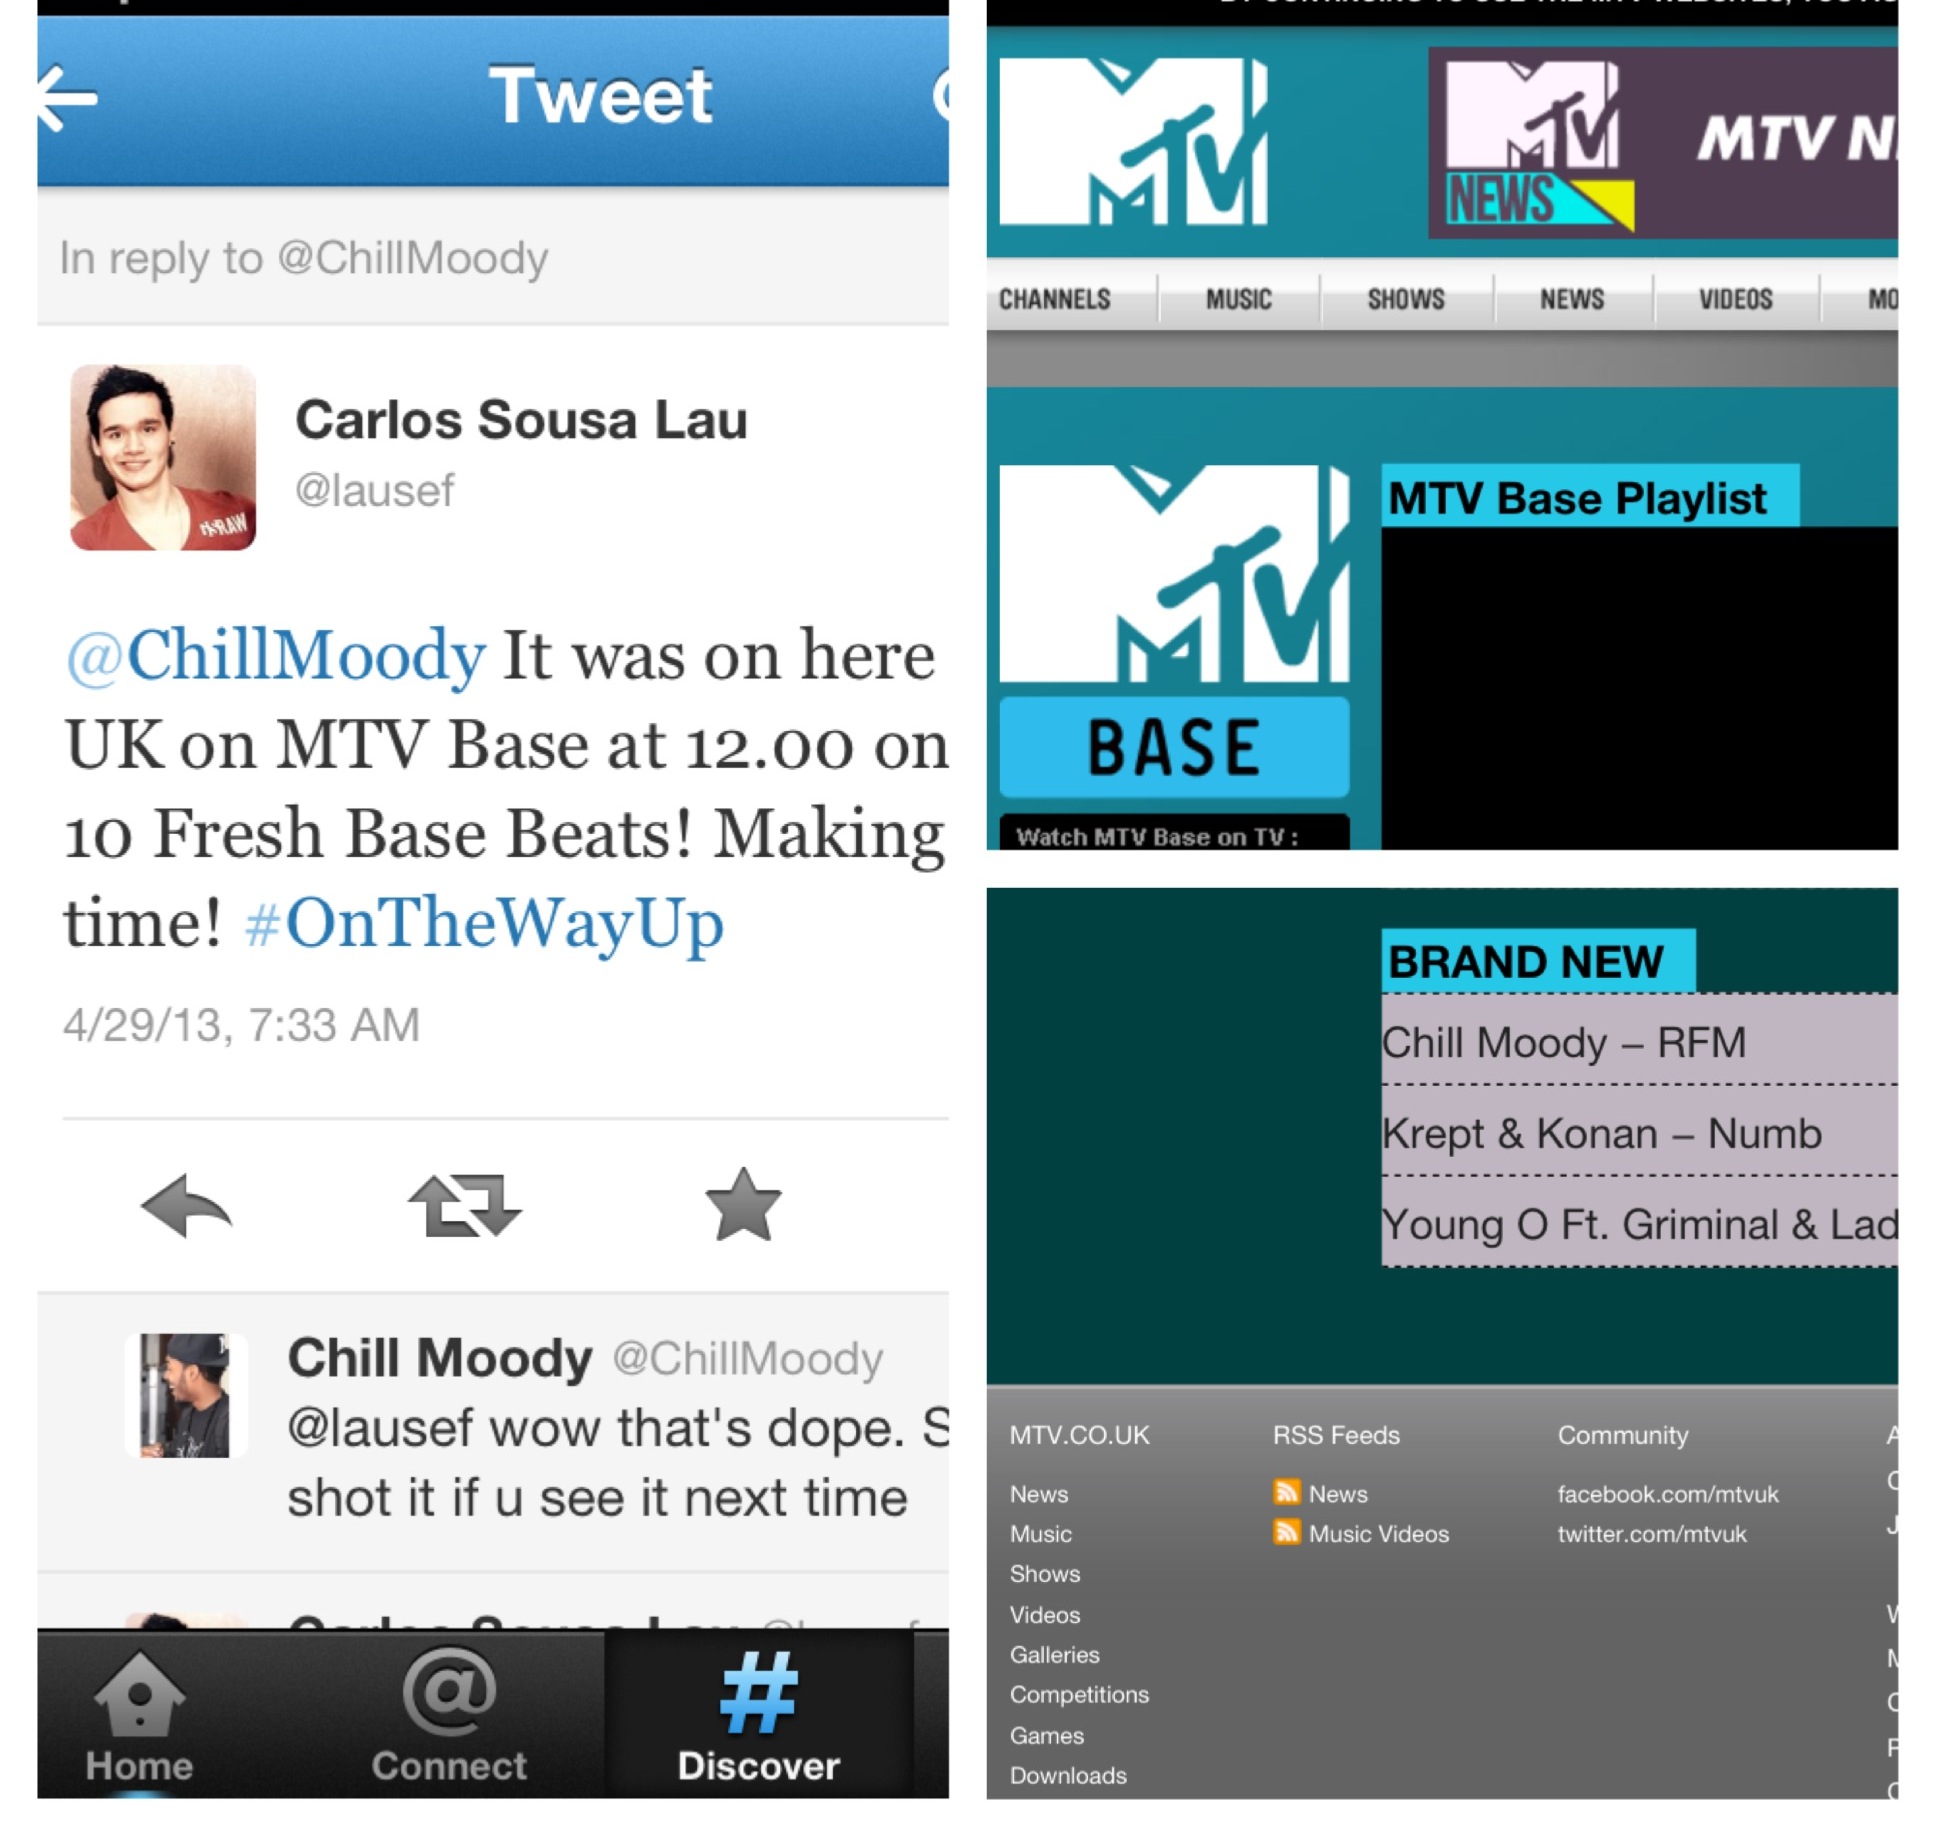 chill-moody-makes-international-tv-debut-on-mtv-uk-mtv-base-uk-france-s-africa-kenya-more-HHS1987-2013 Chill Moody Makes International TV Debut on MTV UK/ MTV Base (UK, France, S. Africa, Kenya & more)  